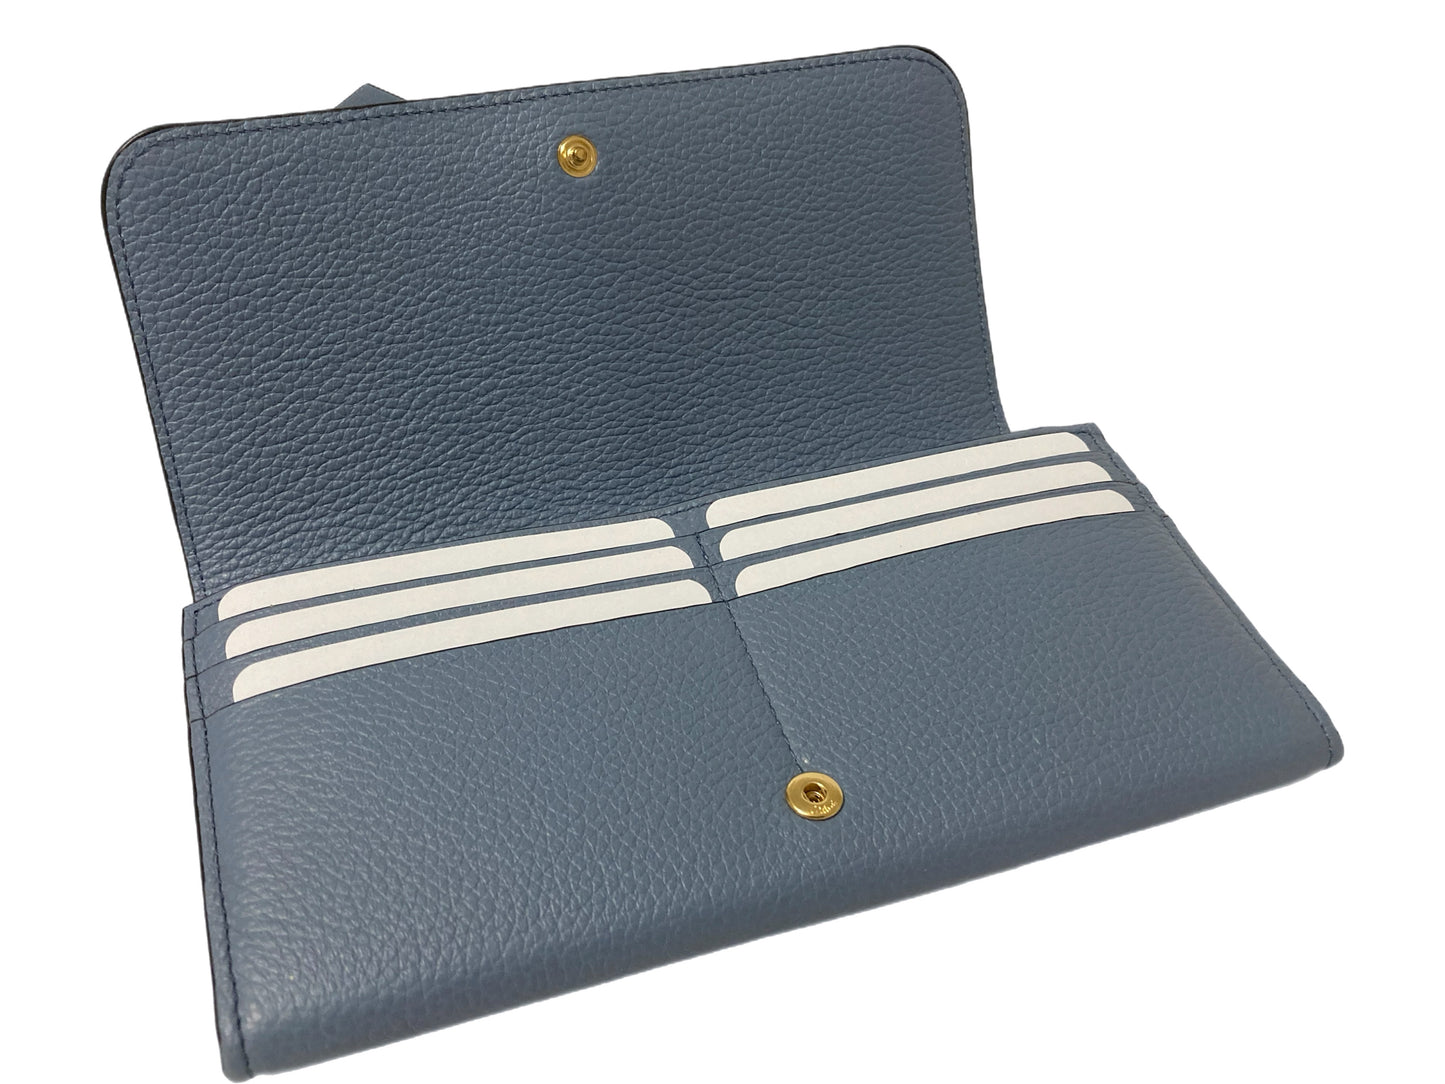 CHLOE Leather Charm Flap Wallet Cobalt Blue